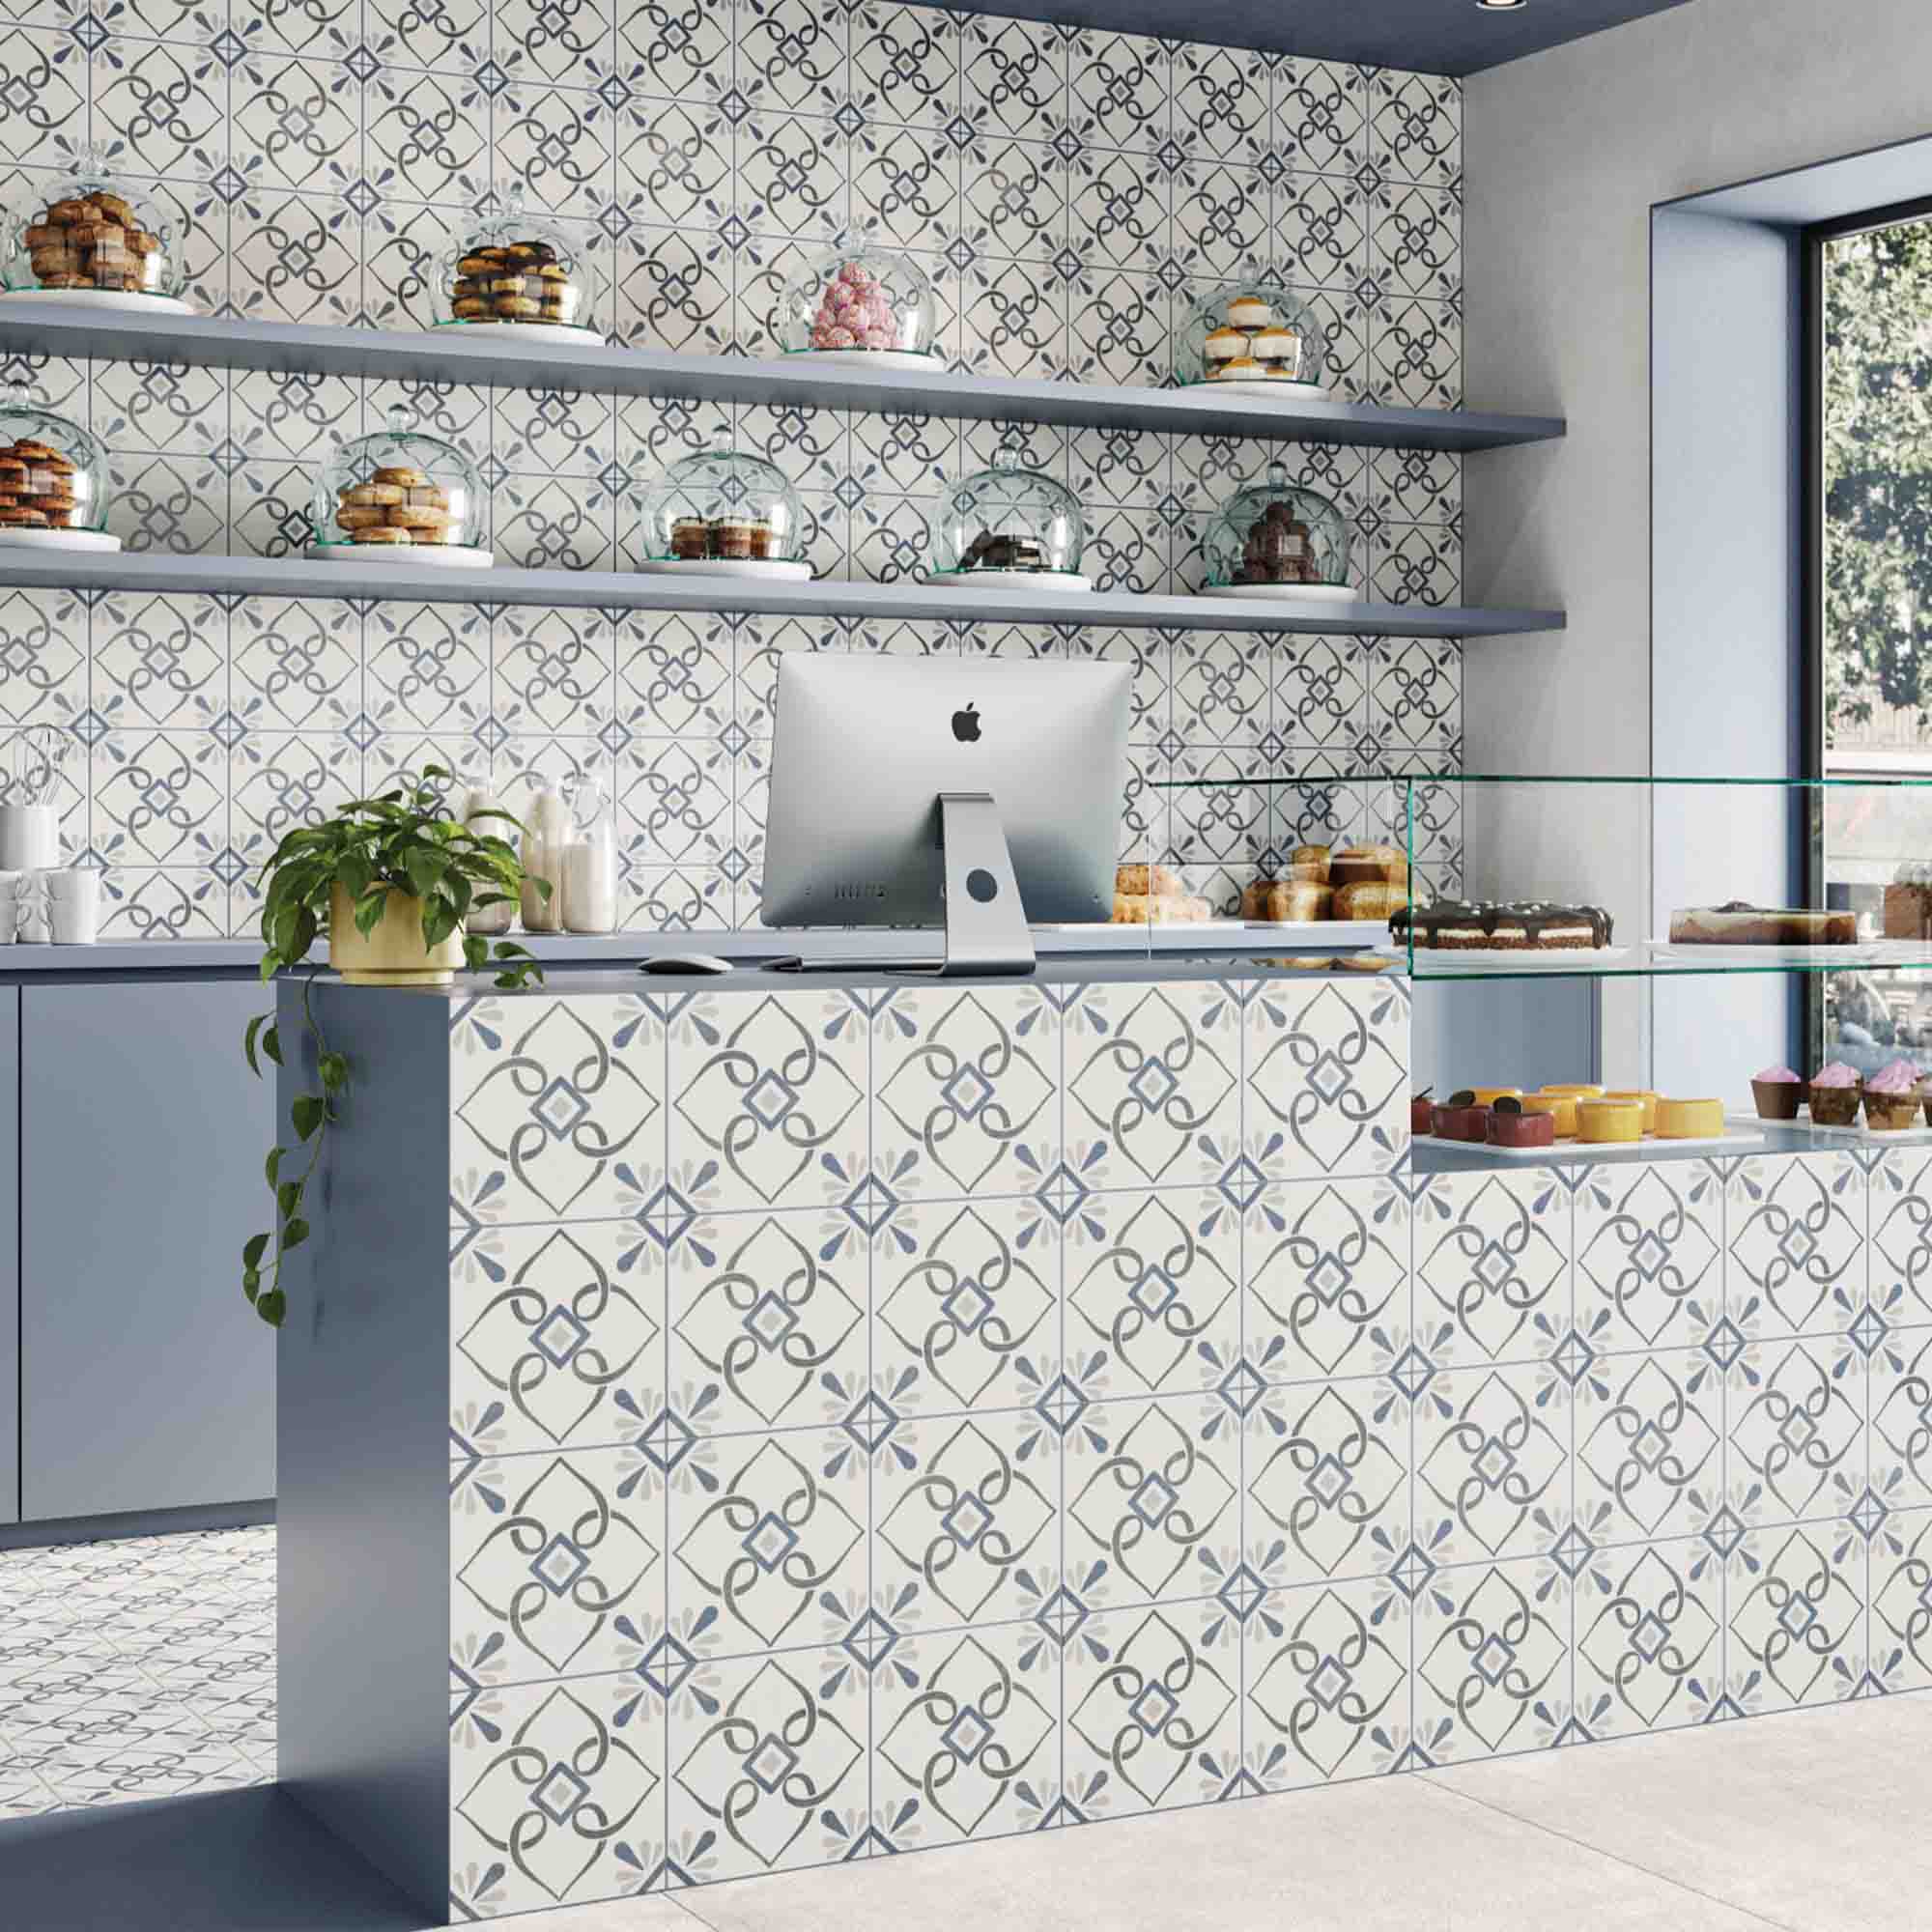 provenza blue bloom pattern porcelain tile 22x22cm matt